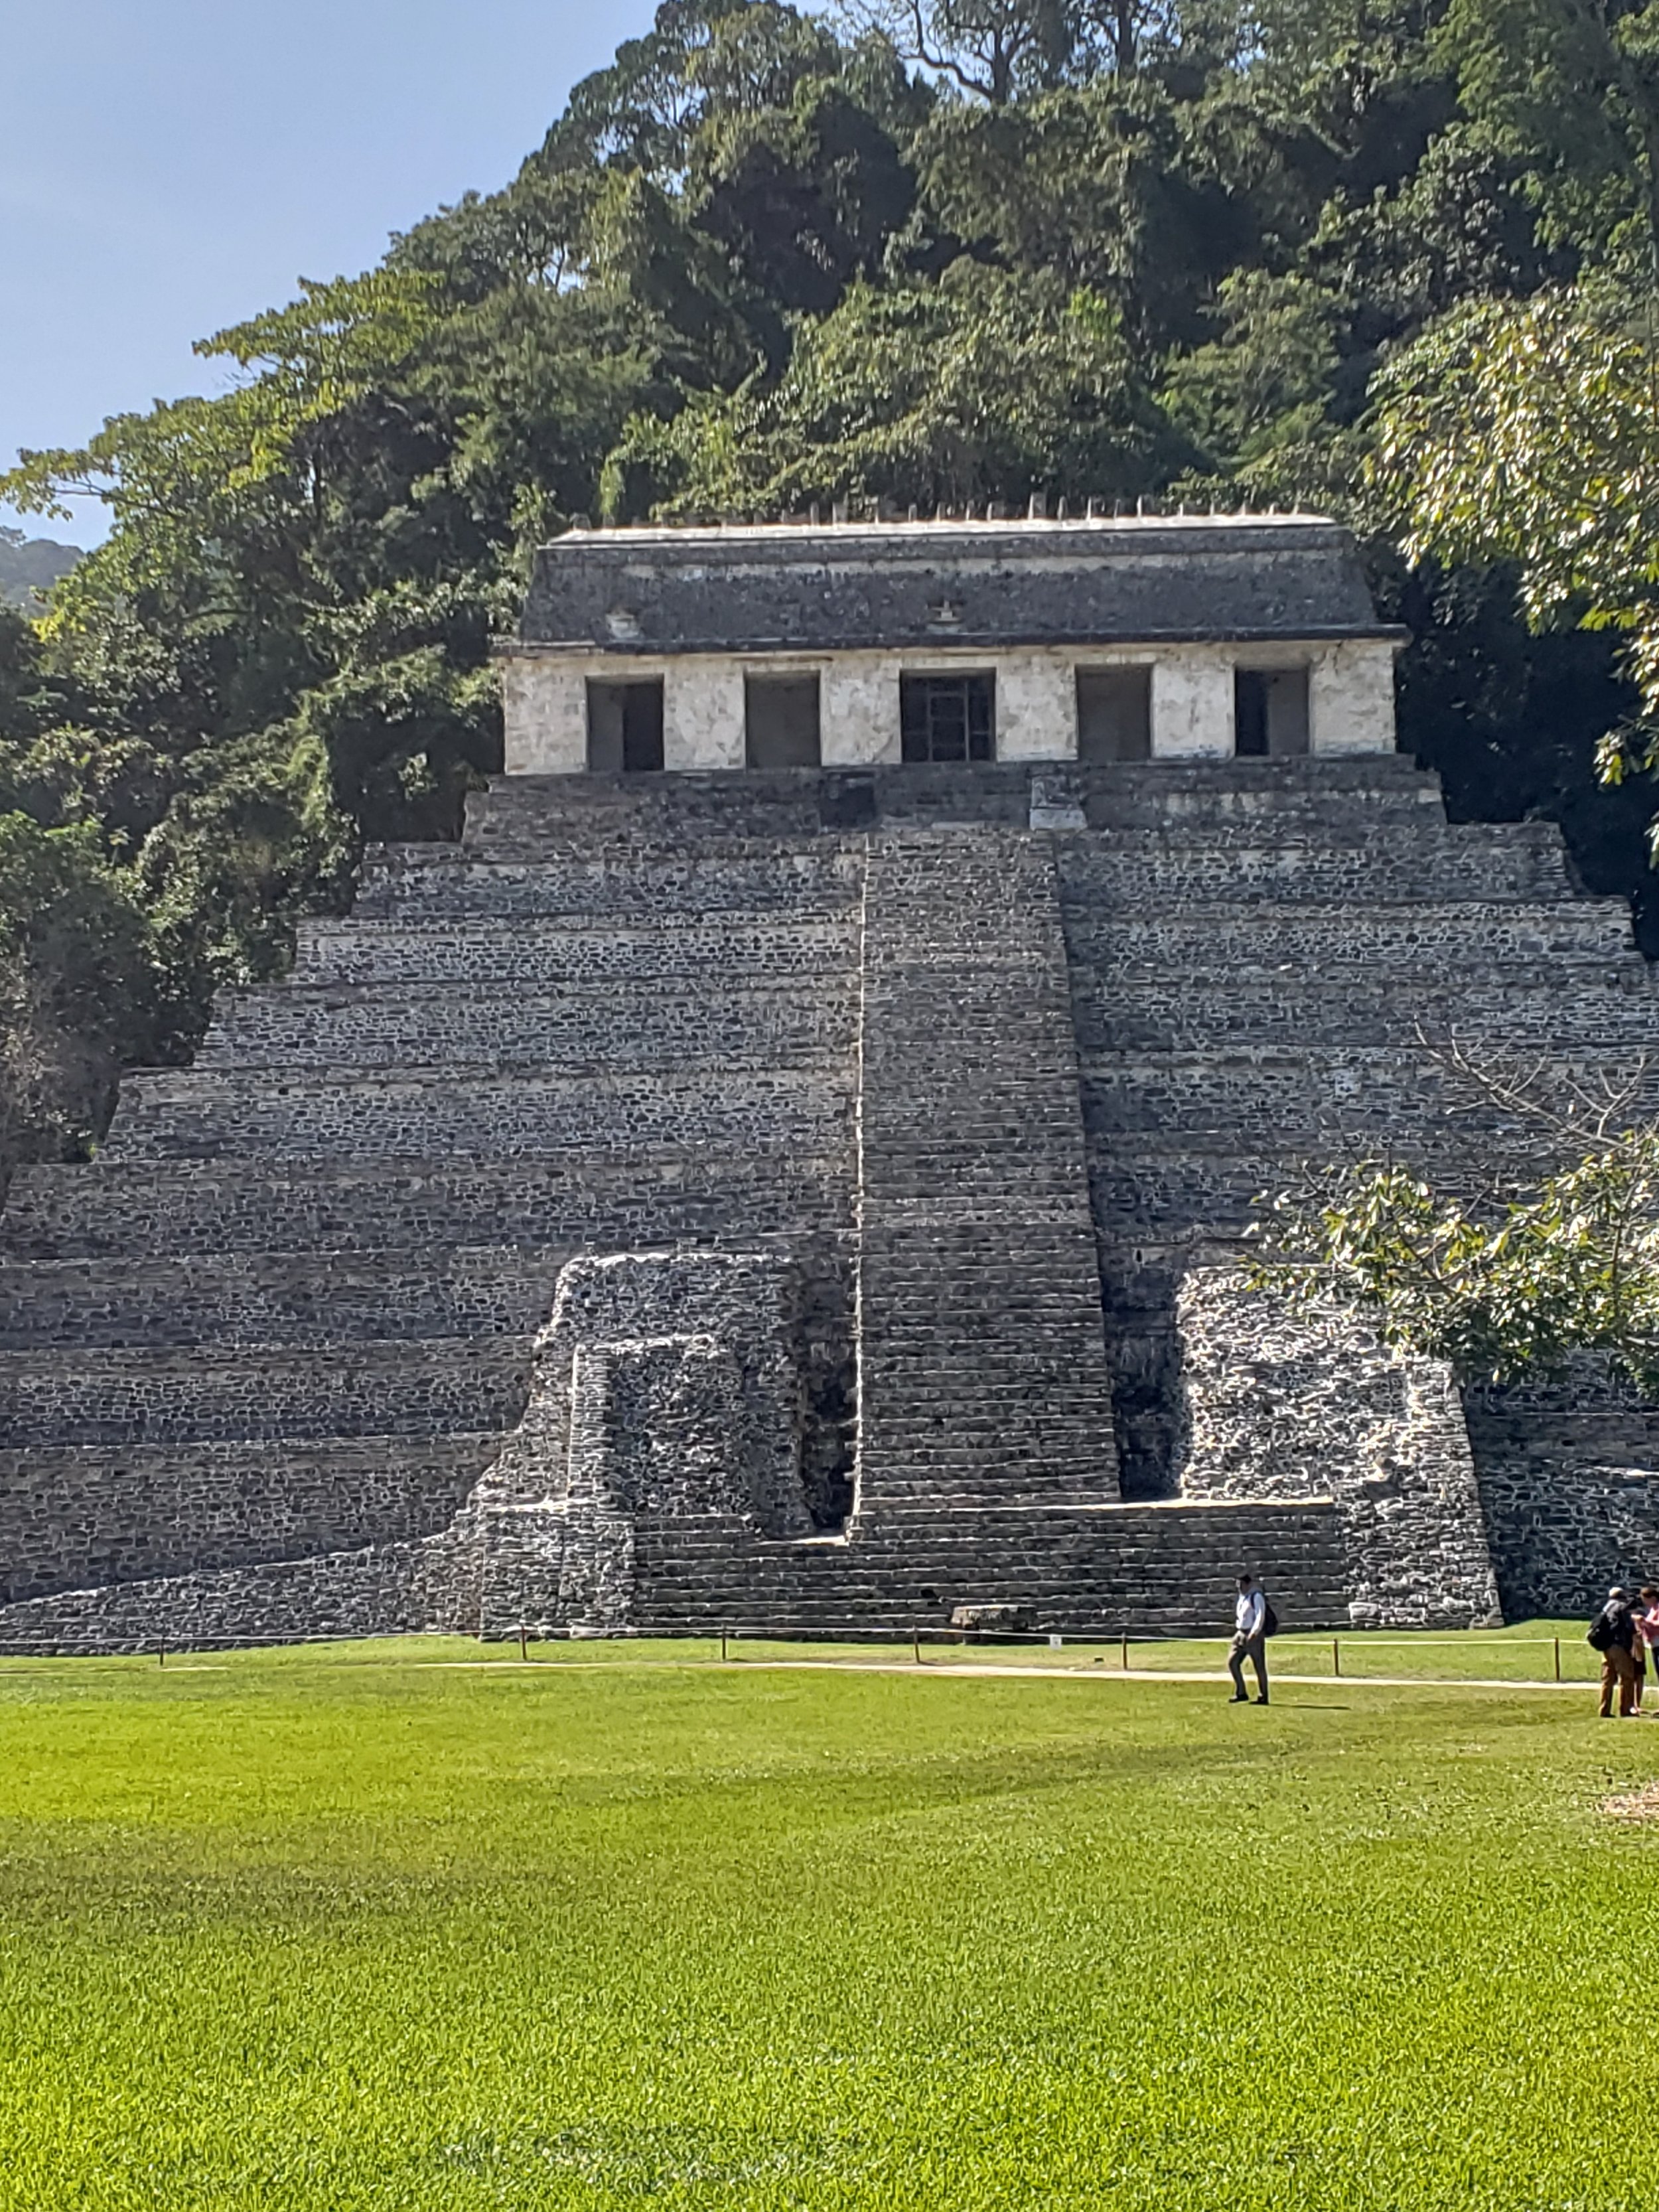 The famous Mayan ruins at Palenque